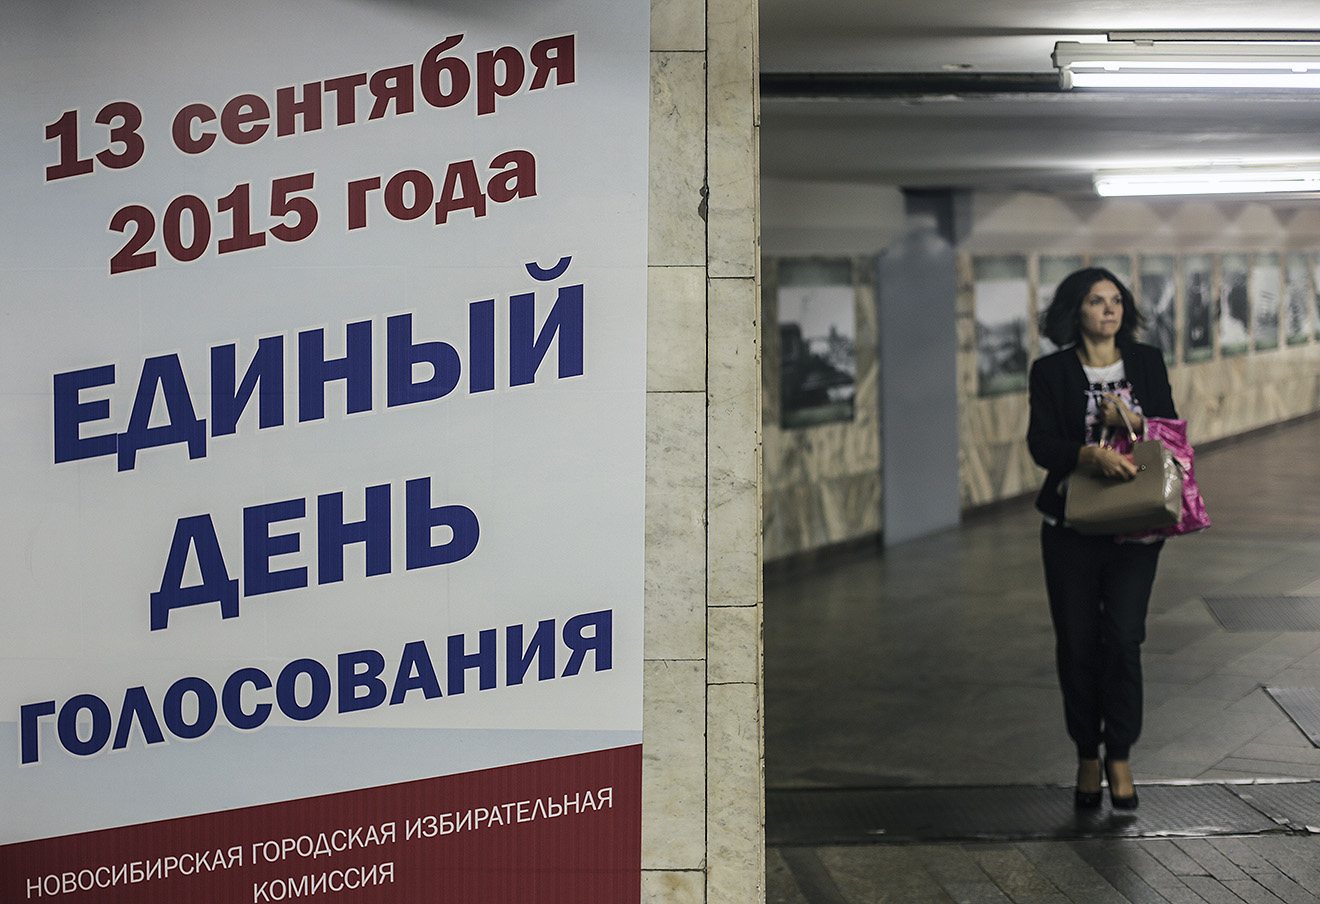 Pre-election preparations for voting day on 13th September 2015 in Novosibirsk. Photo: Evgeny Kurskov / TASS